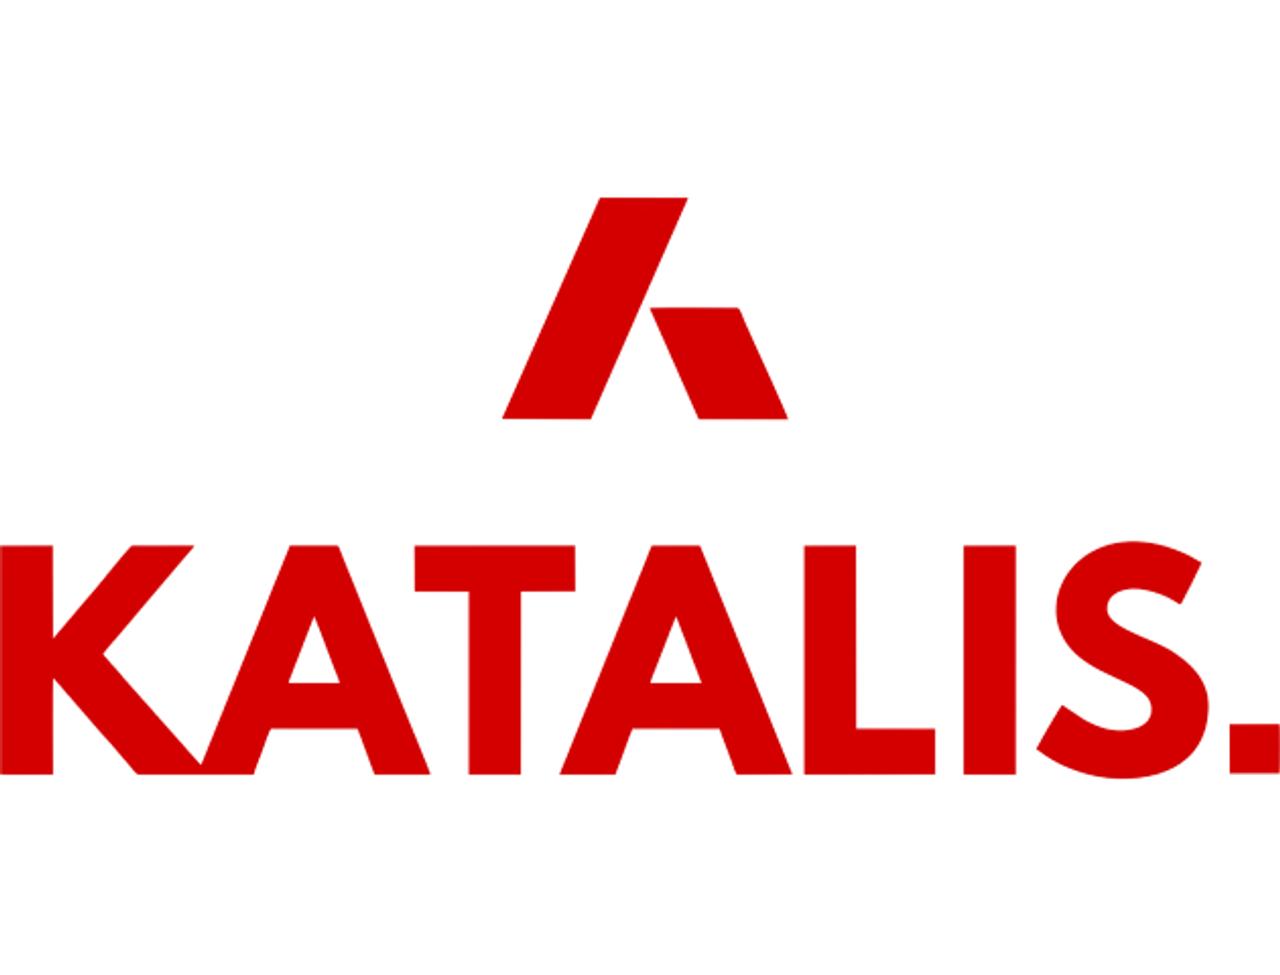 Katalis logo